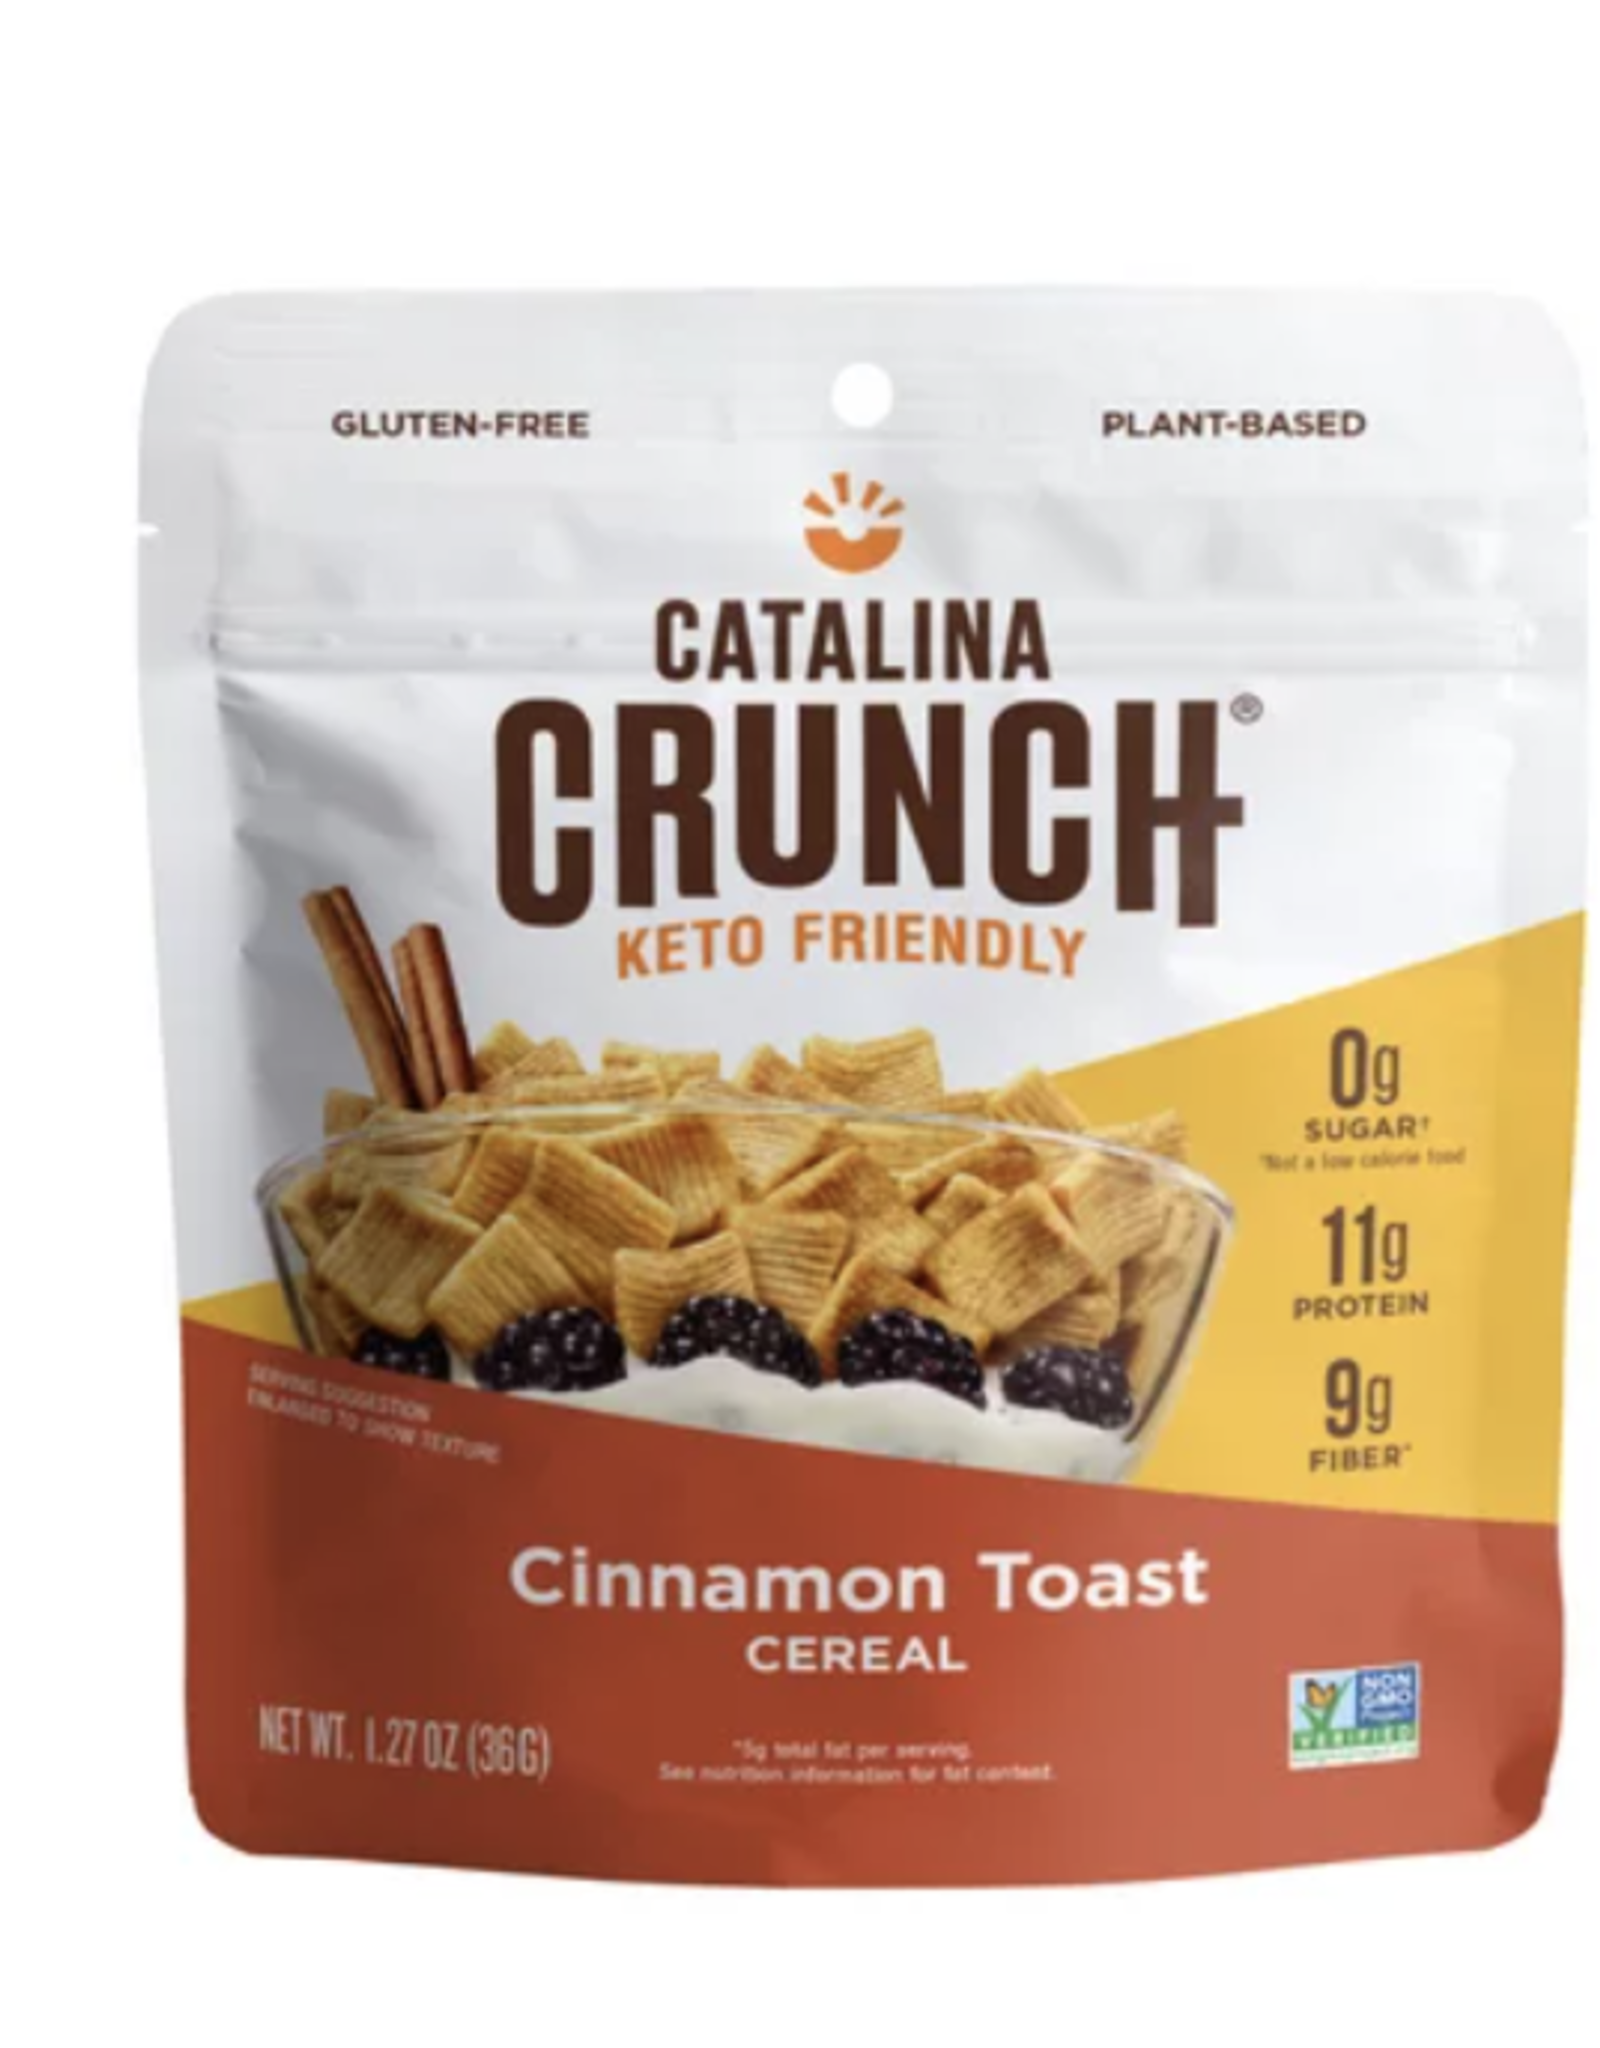 Catalina Crunch Catalina Crunch Single Cinnamon Toast Cereal